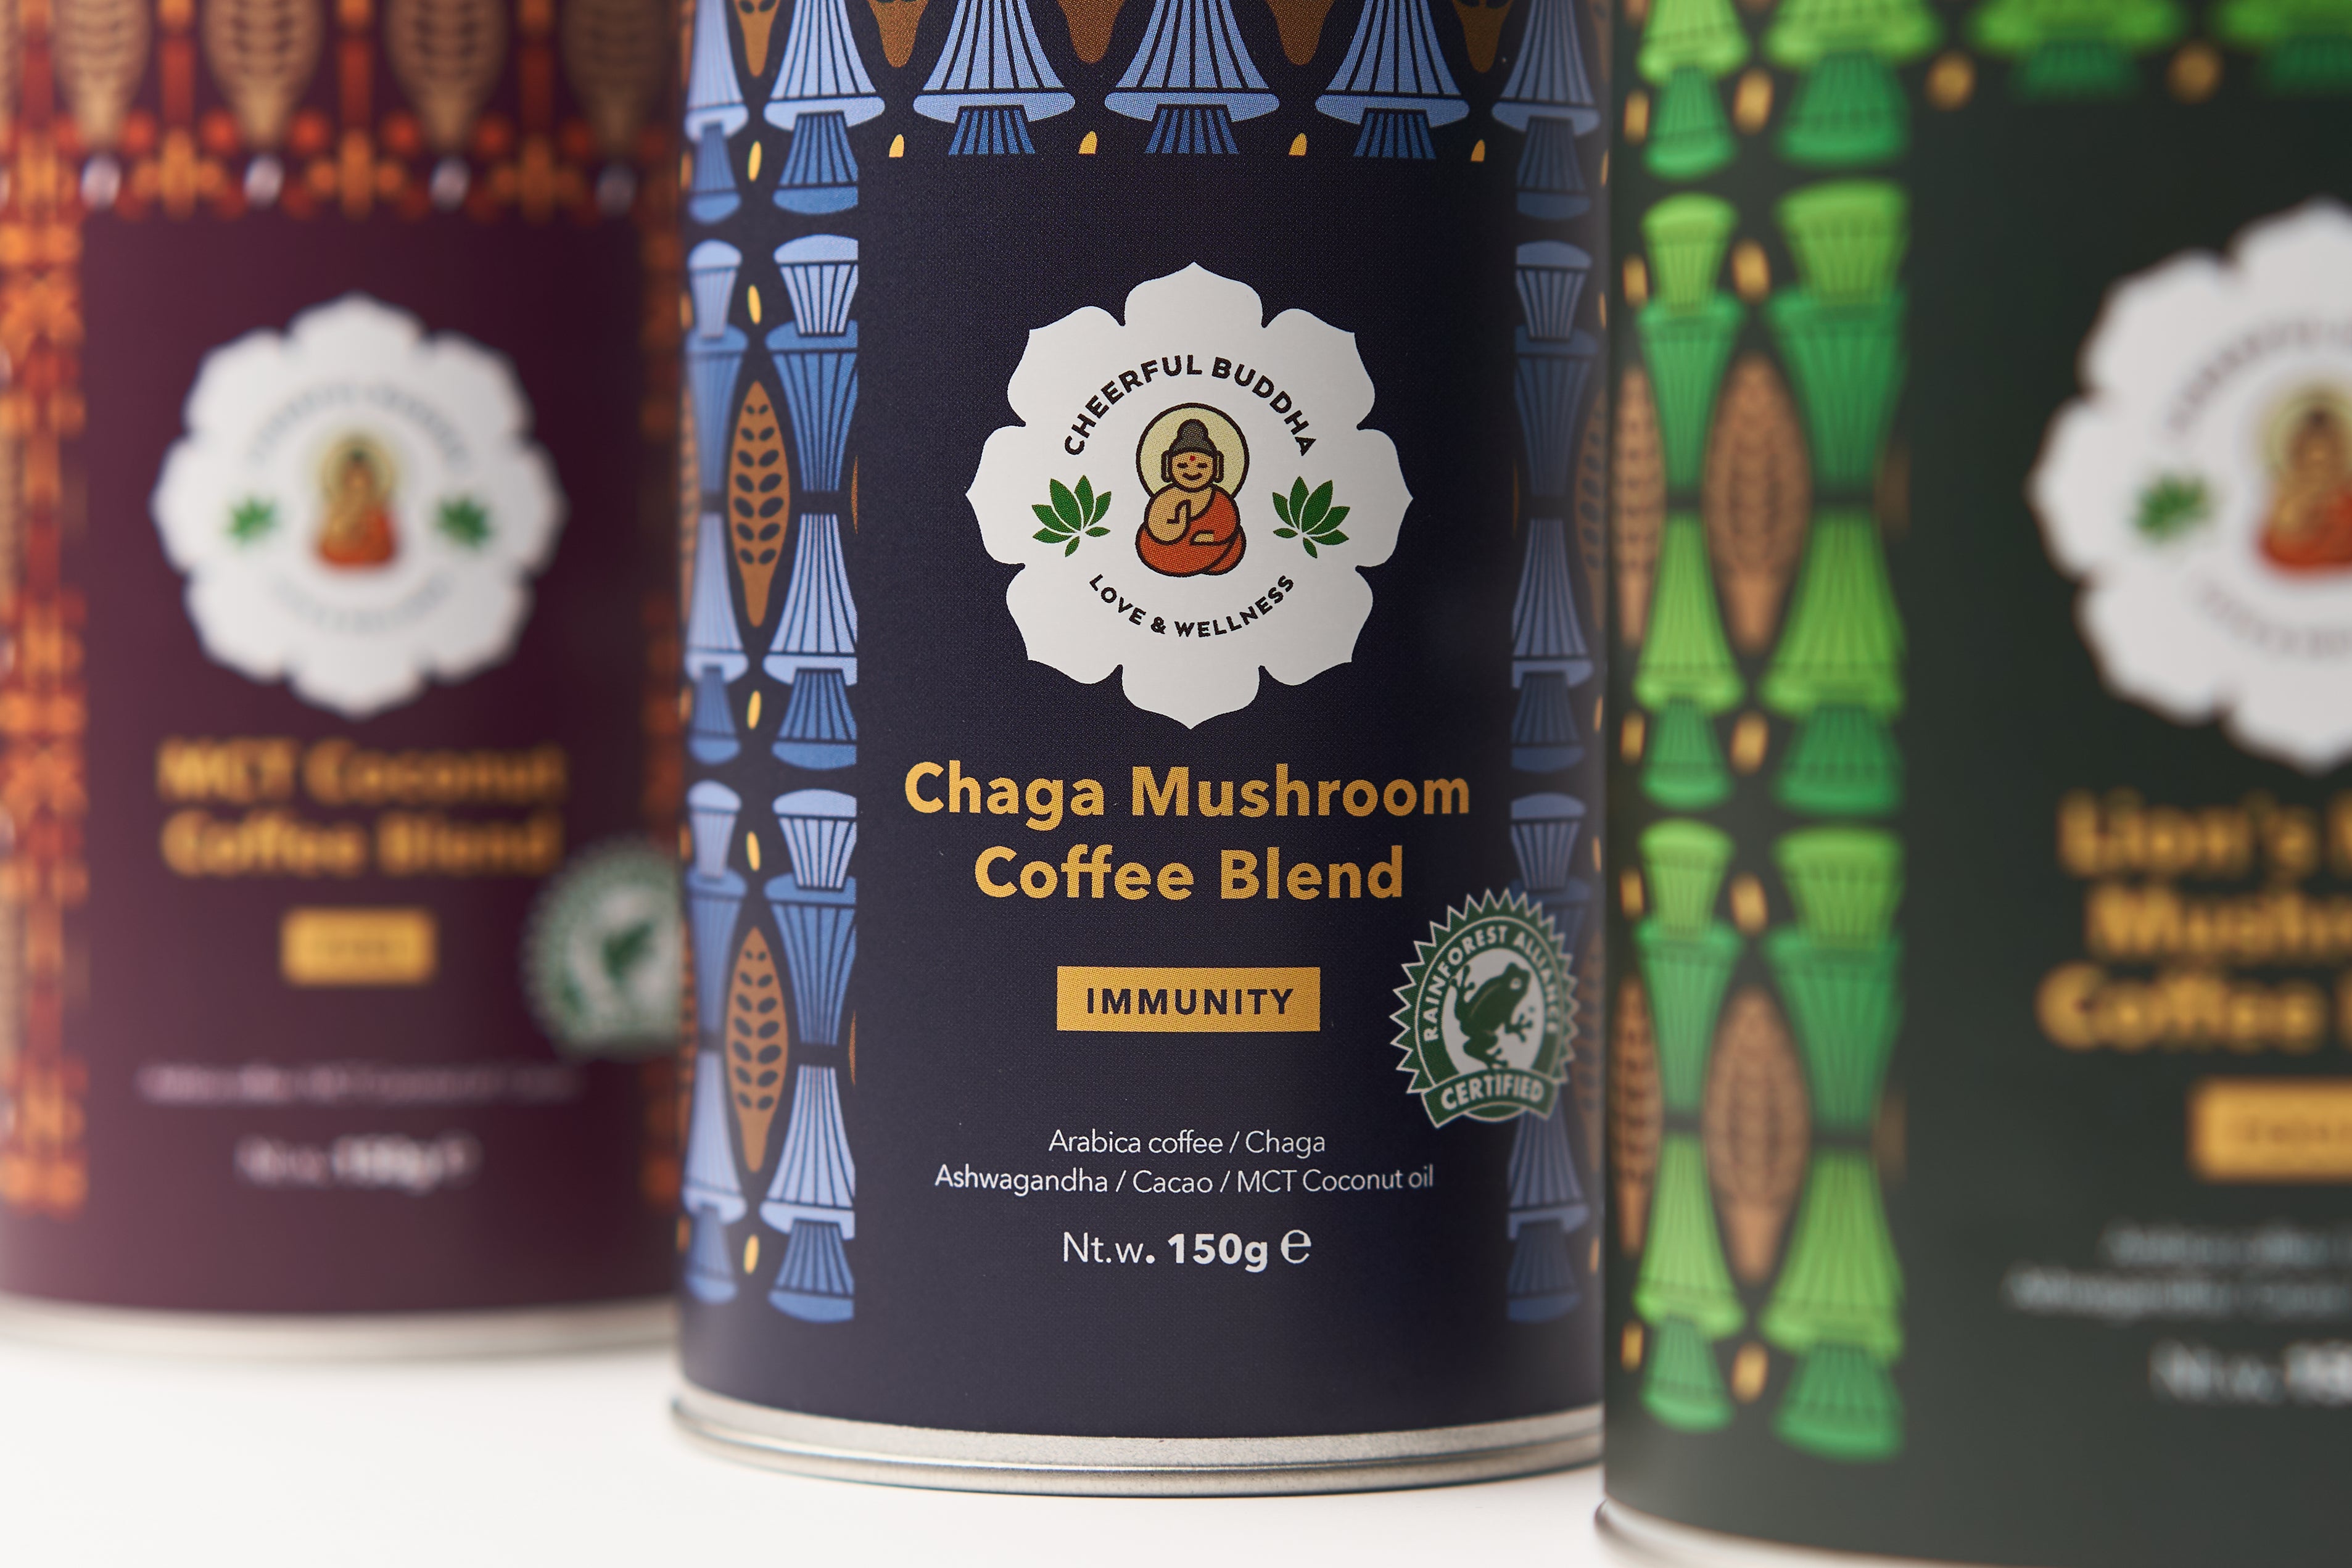 Introduction to Chaga Mushroom Coffee